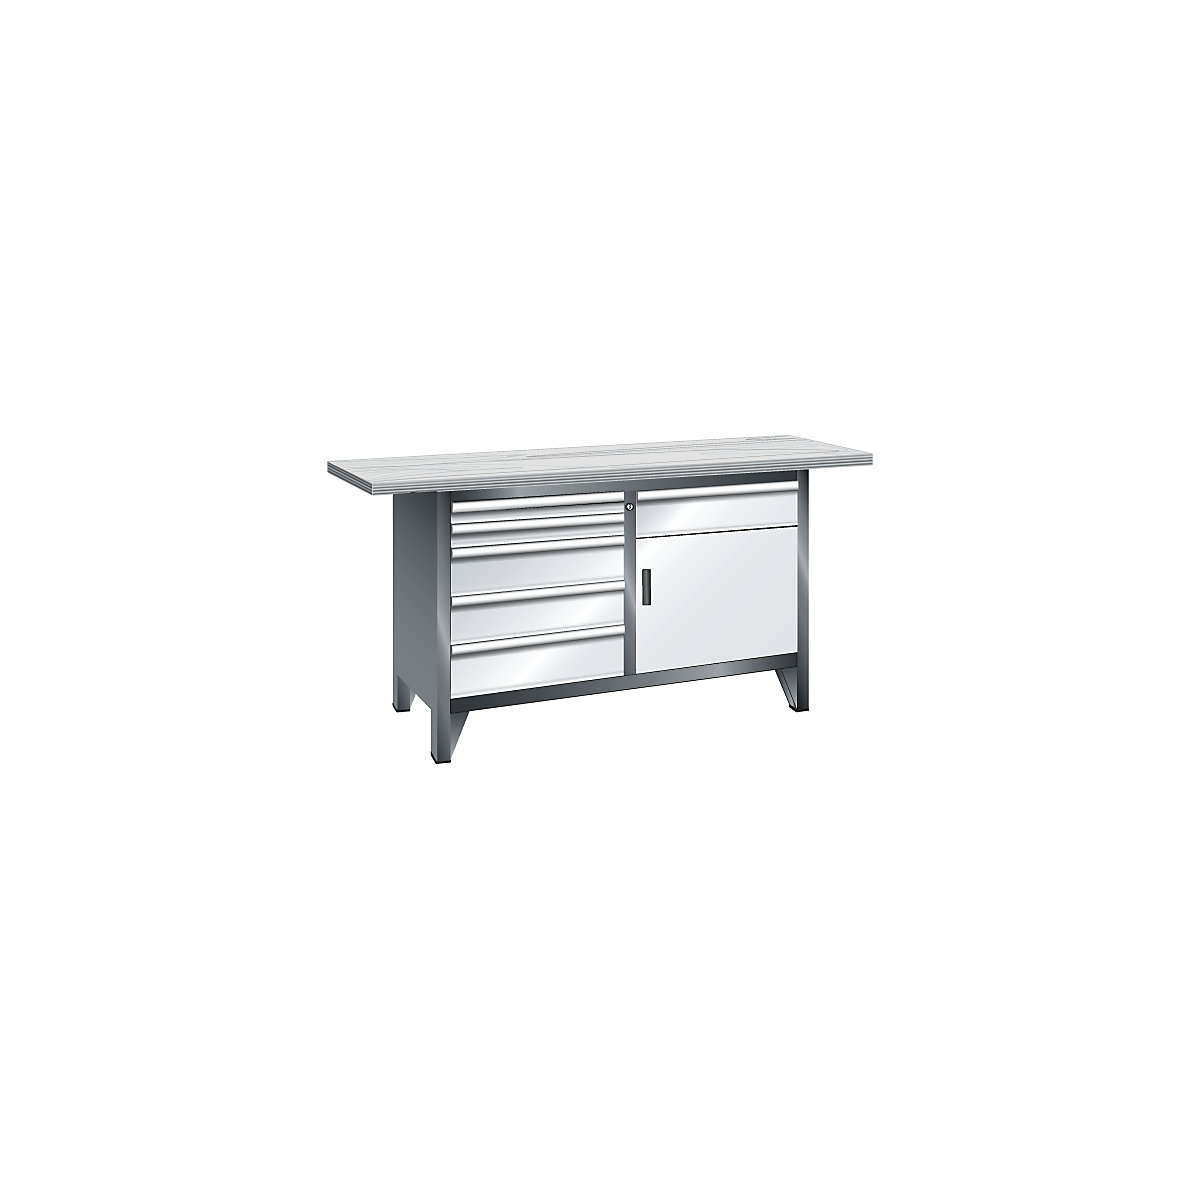 Workbench width 1500 mm, frame construction – LISTA, 1 shelf, 6 drawers, 1 door, body grey metallic, front light grey-7